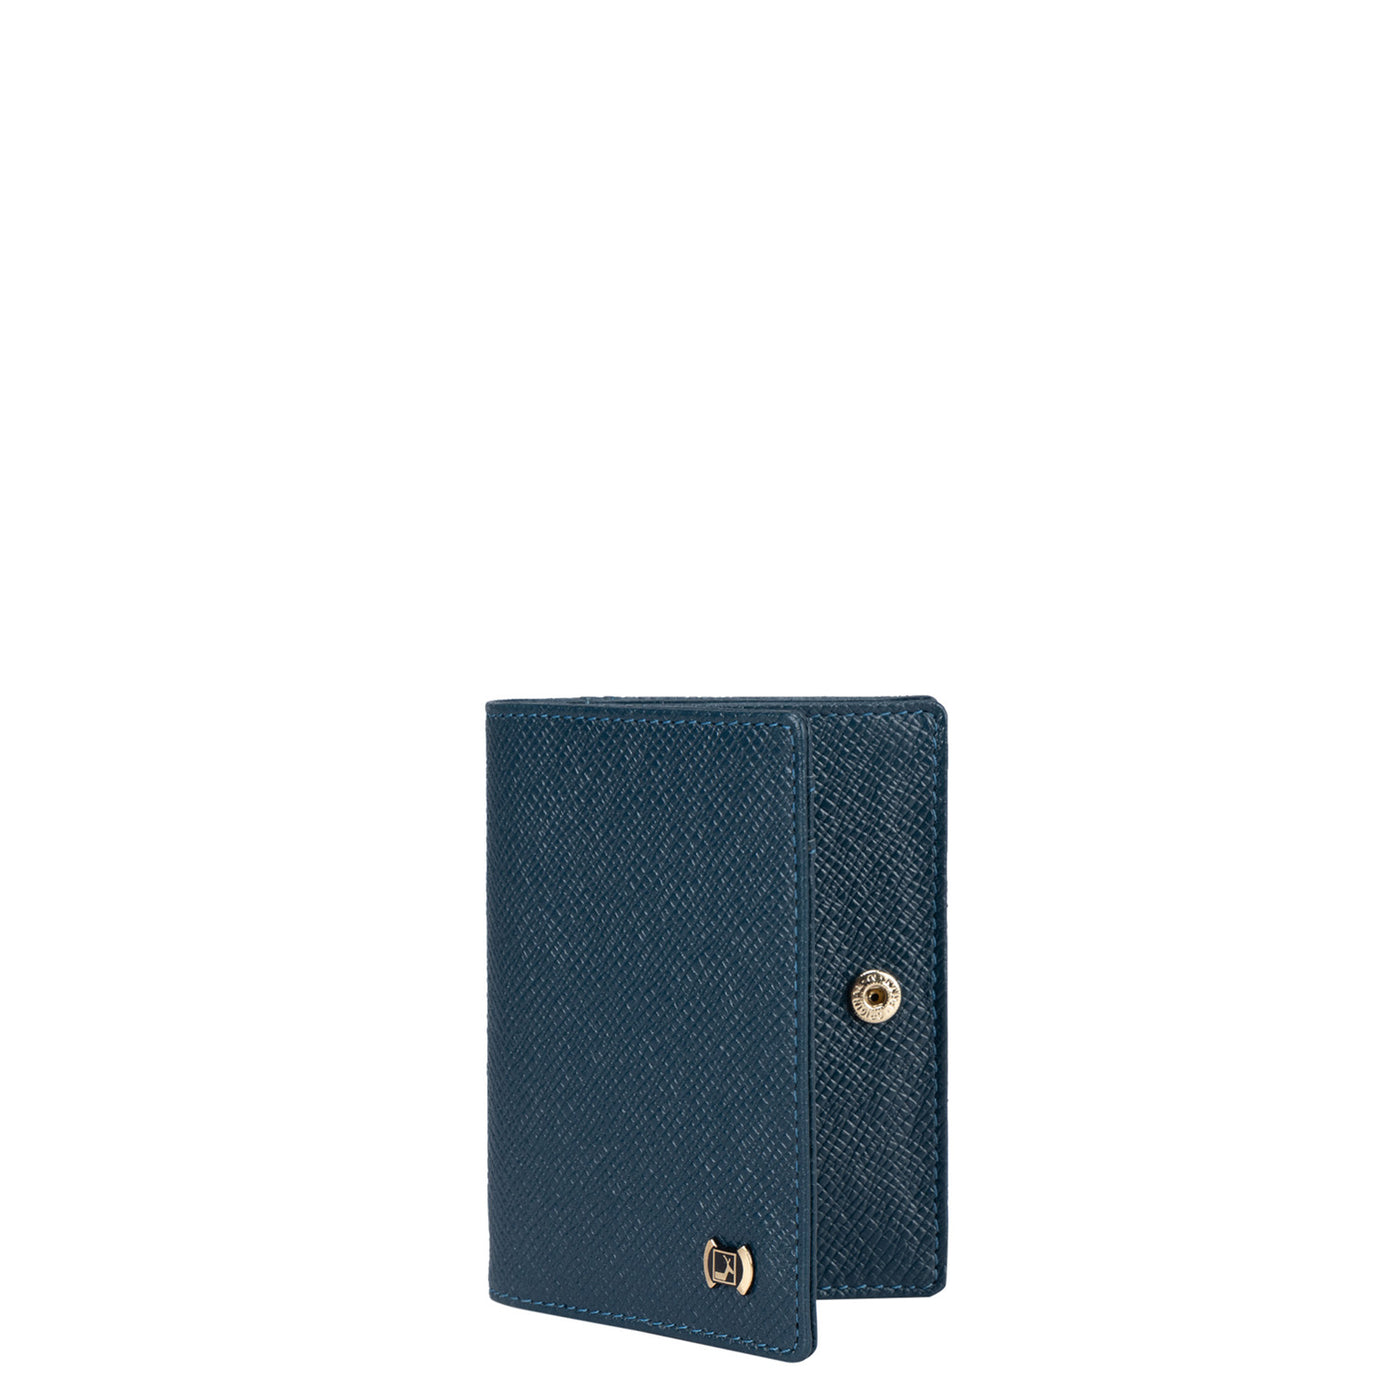 Franzy Leather Card Case - Ocean